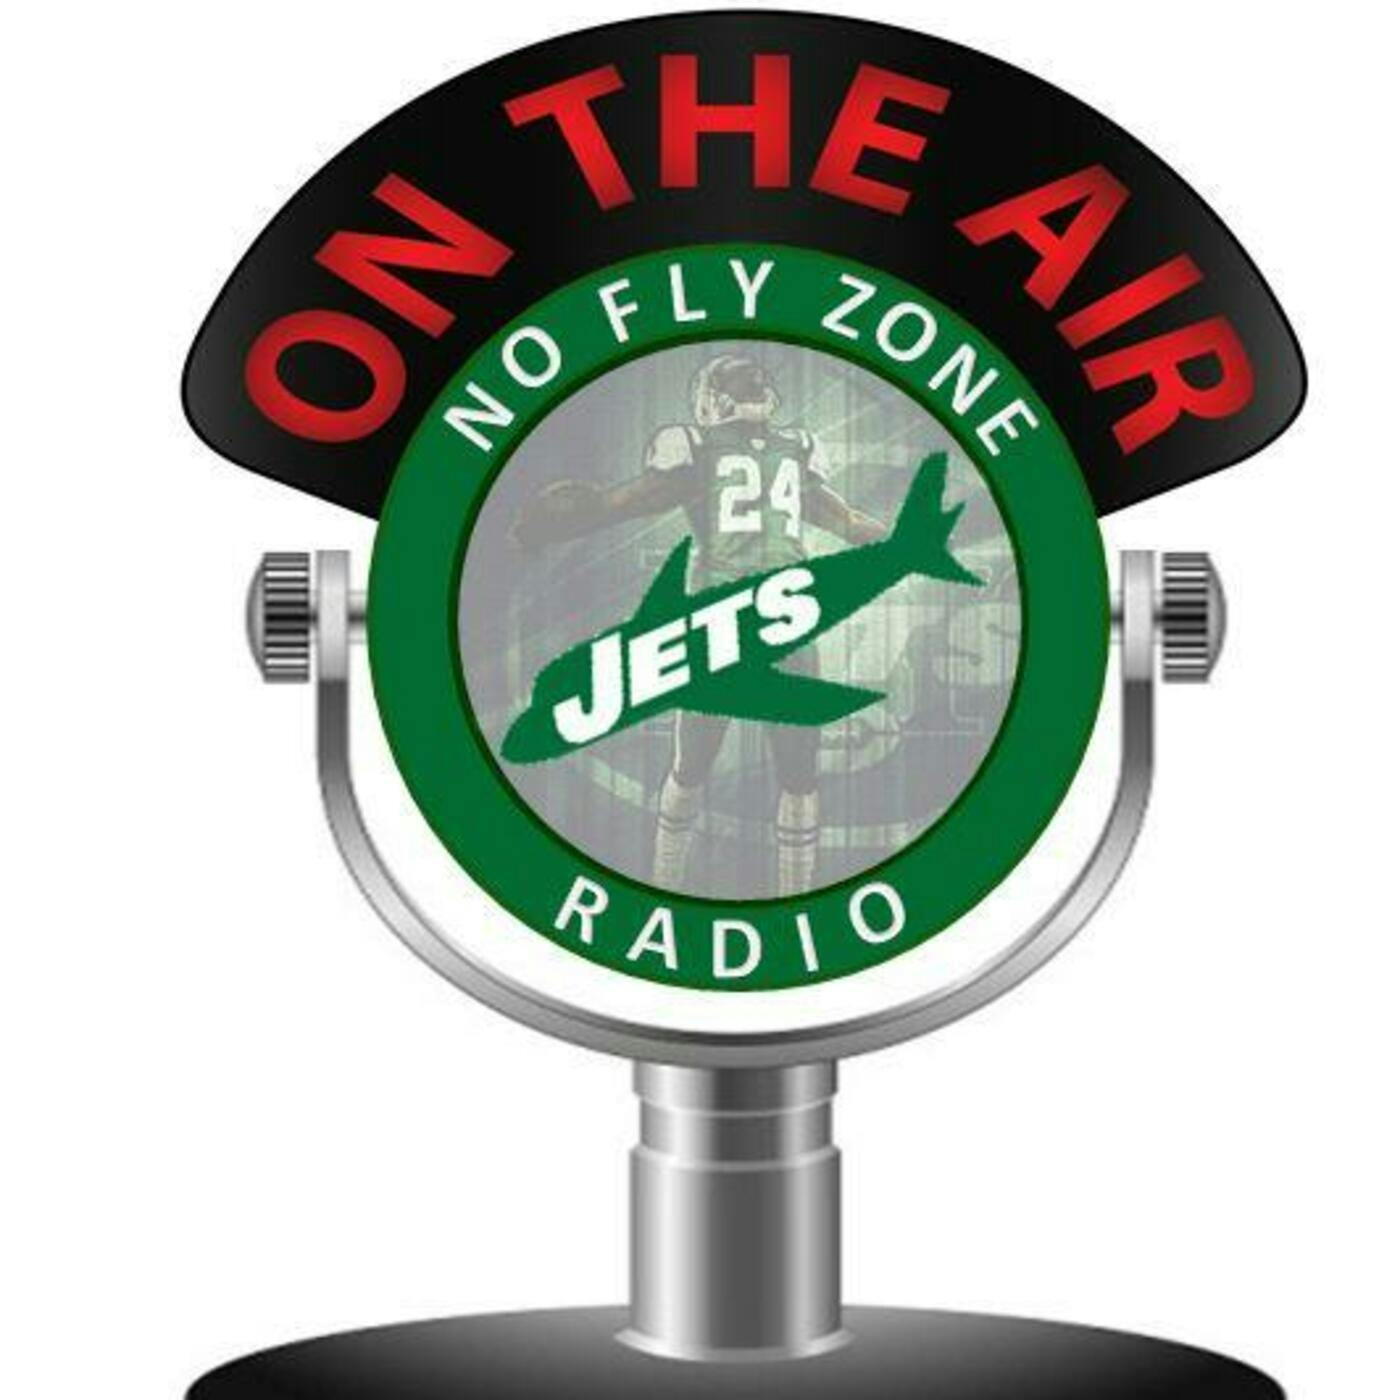 Episode 168: No Fly Zone Radio Episode 168